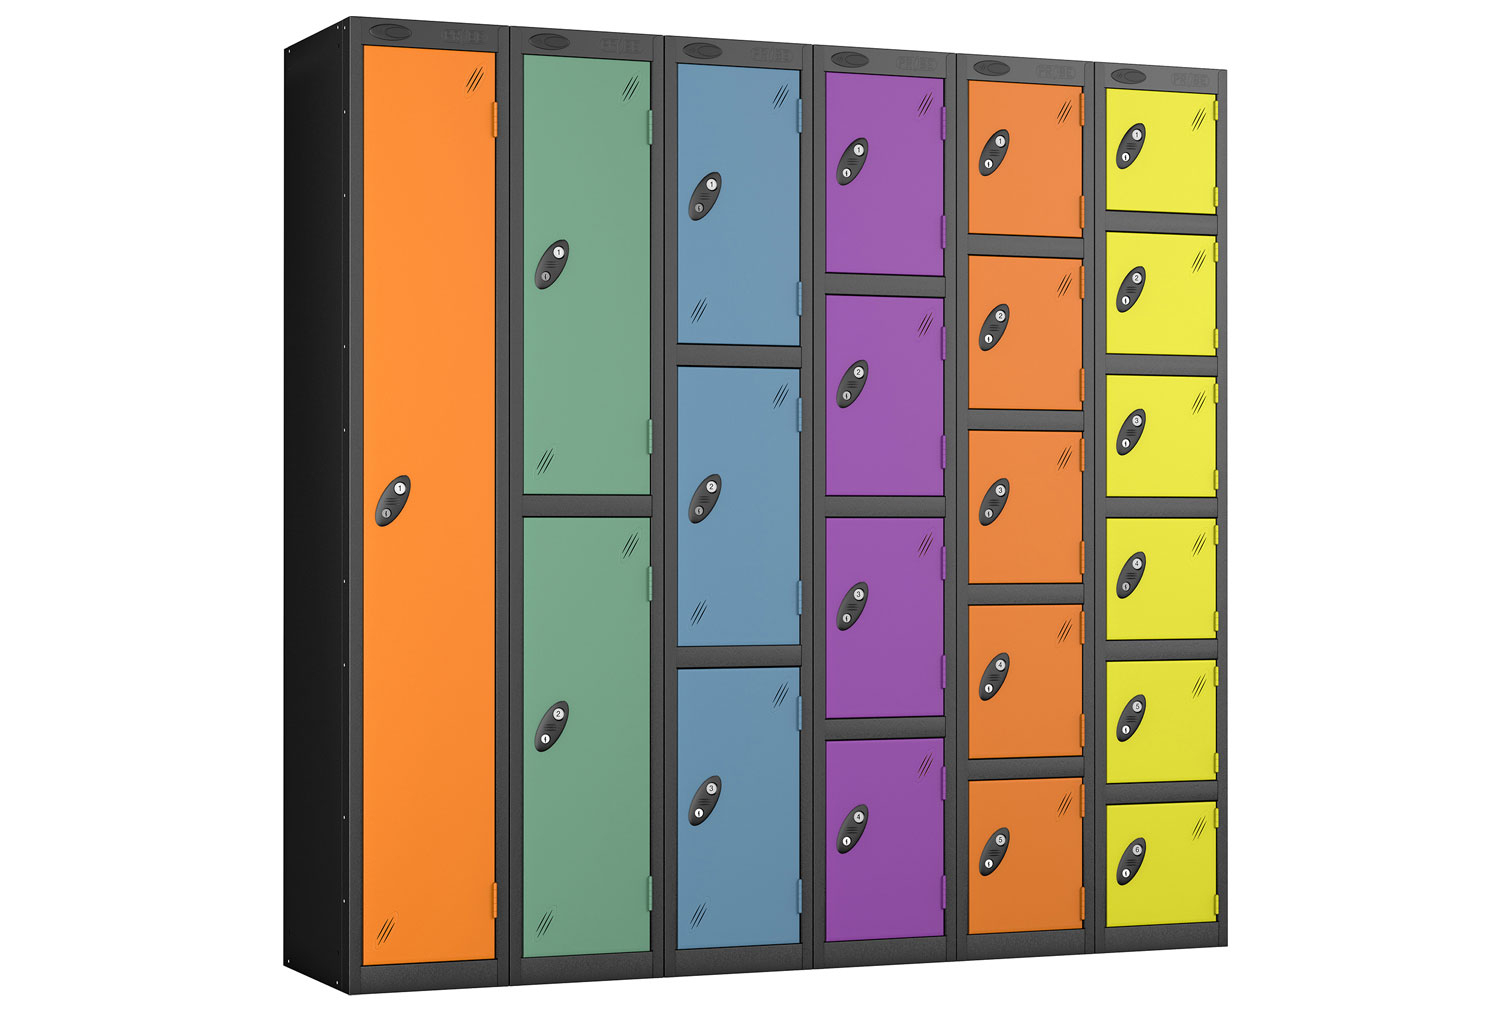 Probe Autumn Colour Lockers With Black Body, 4 Door, 31wx46dx178h (cm), Combination Lock, Black Body, Jade